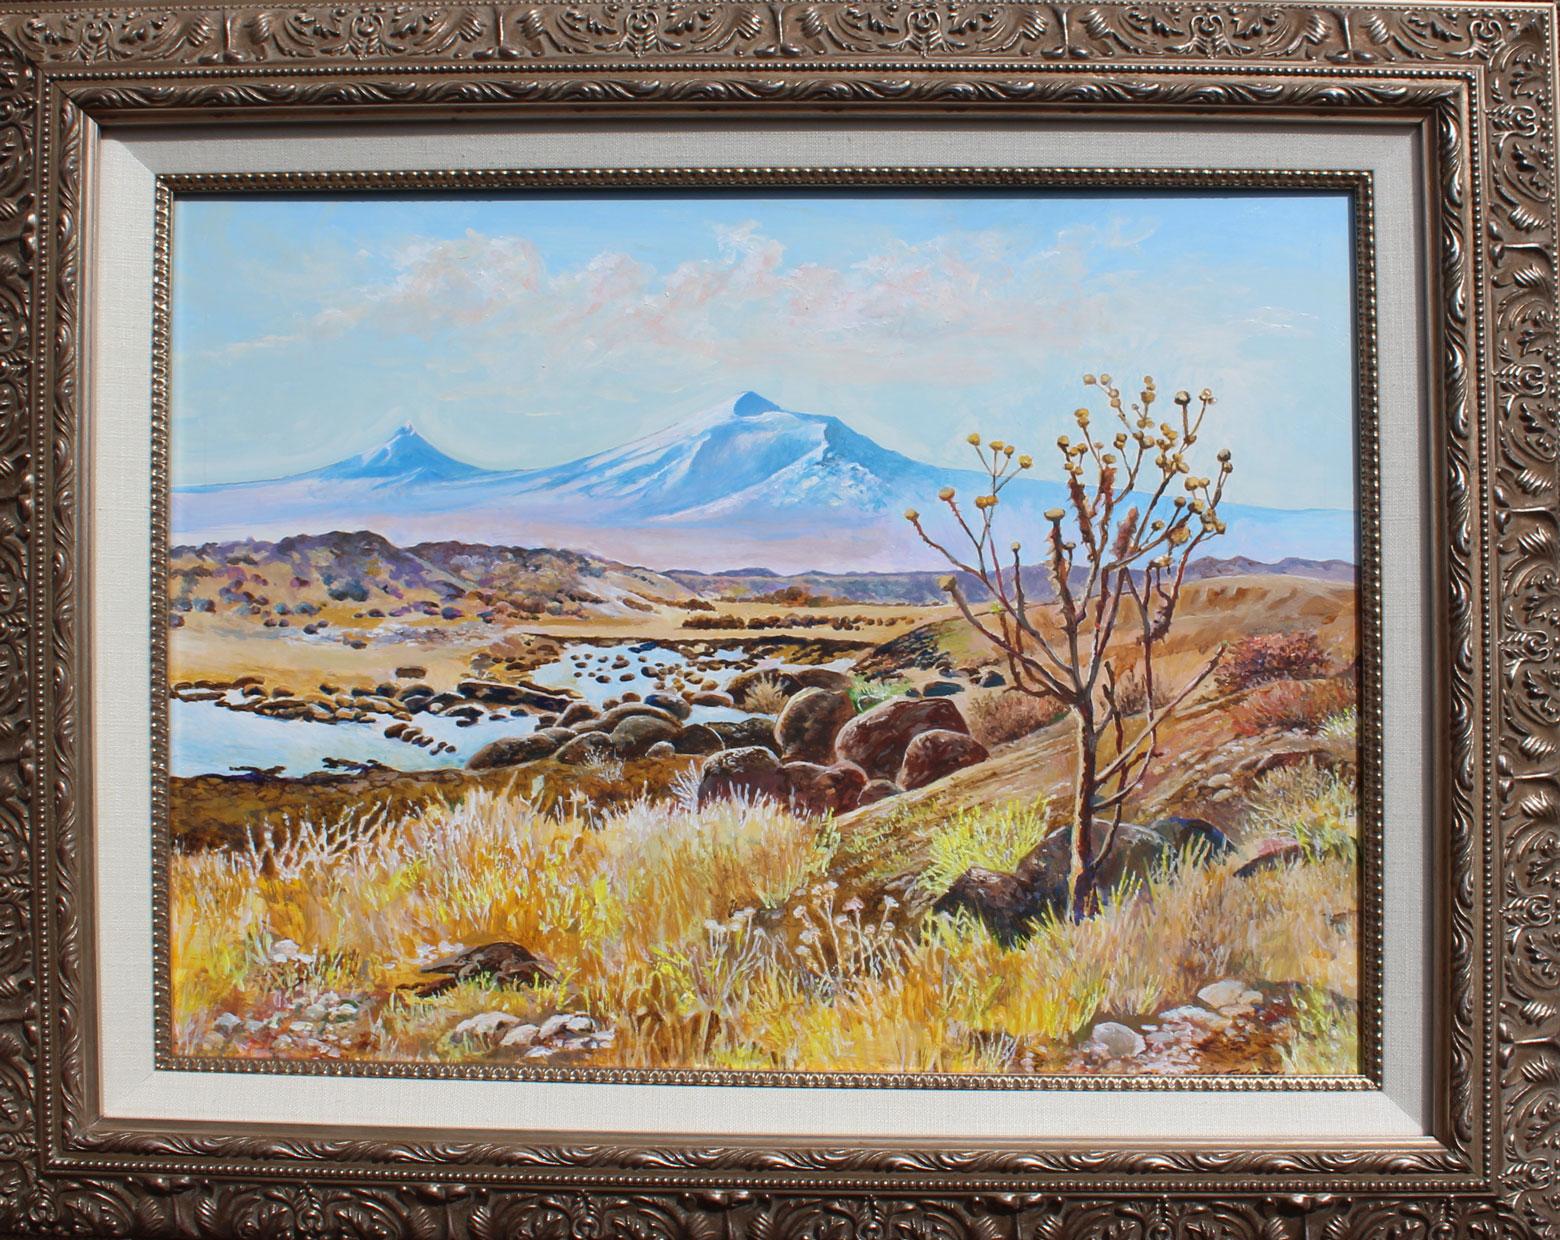 Mt. Ararat, near the Ardashat area with Thorn tree, Armenia  - Painting by Richard H. Tashjian